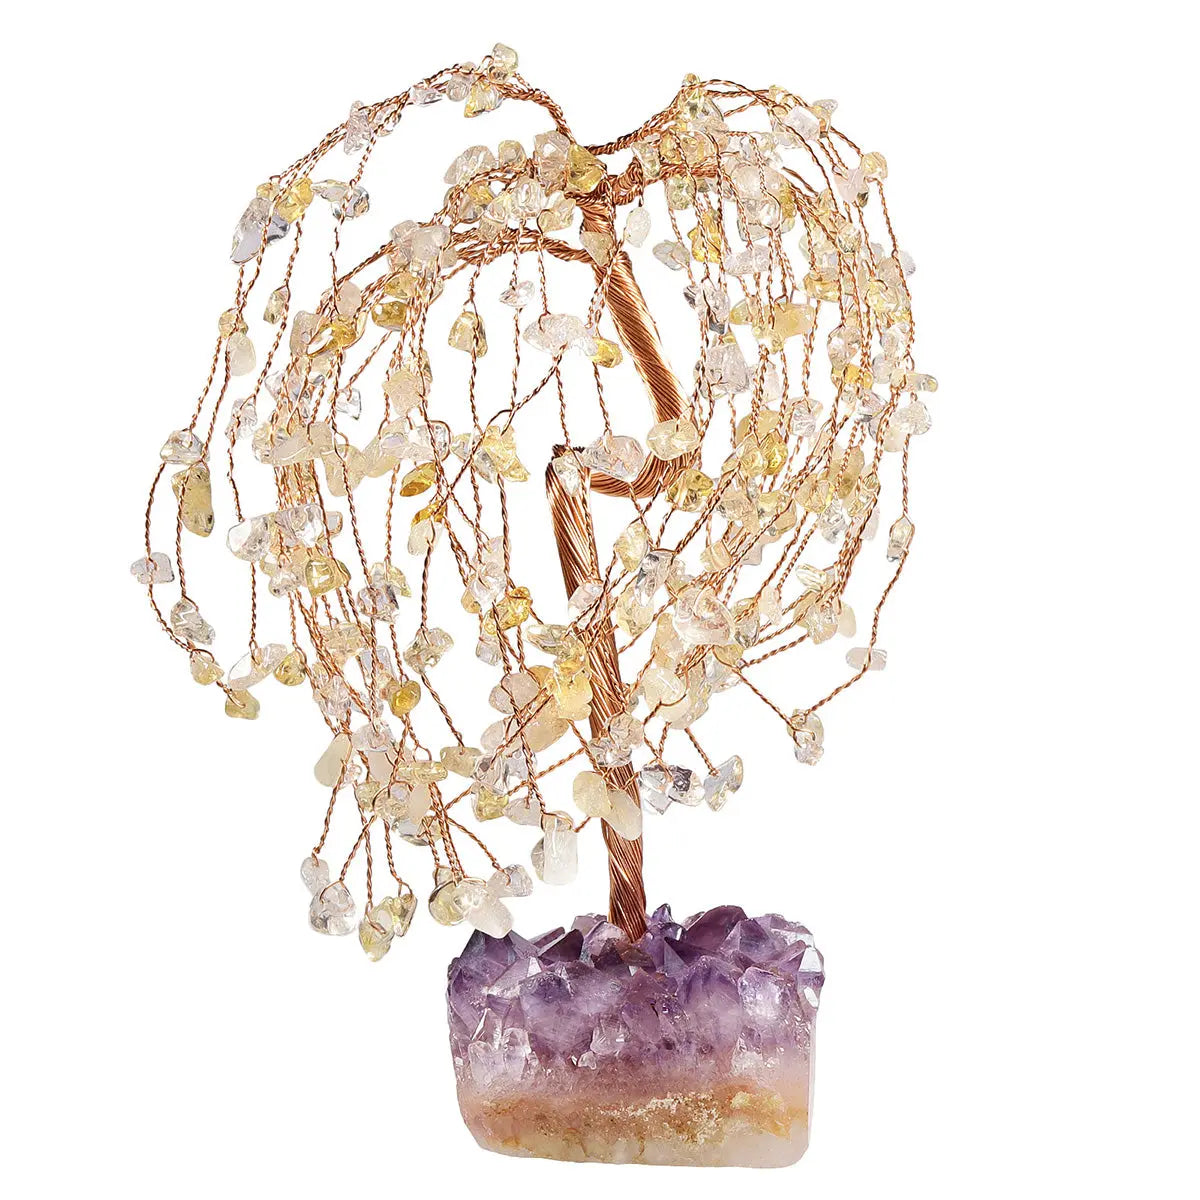 Willow Crystal Tree Energy Crystal Amethyst Cluster Base Crafts, Amethyst, Rose Quartz, Peridot Crystals Tree - Bonsai Tree Creative Decorative Ornaments Healing Crystal Home